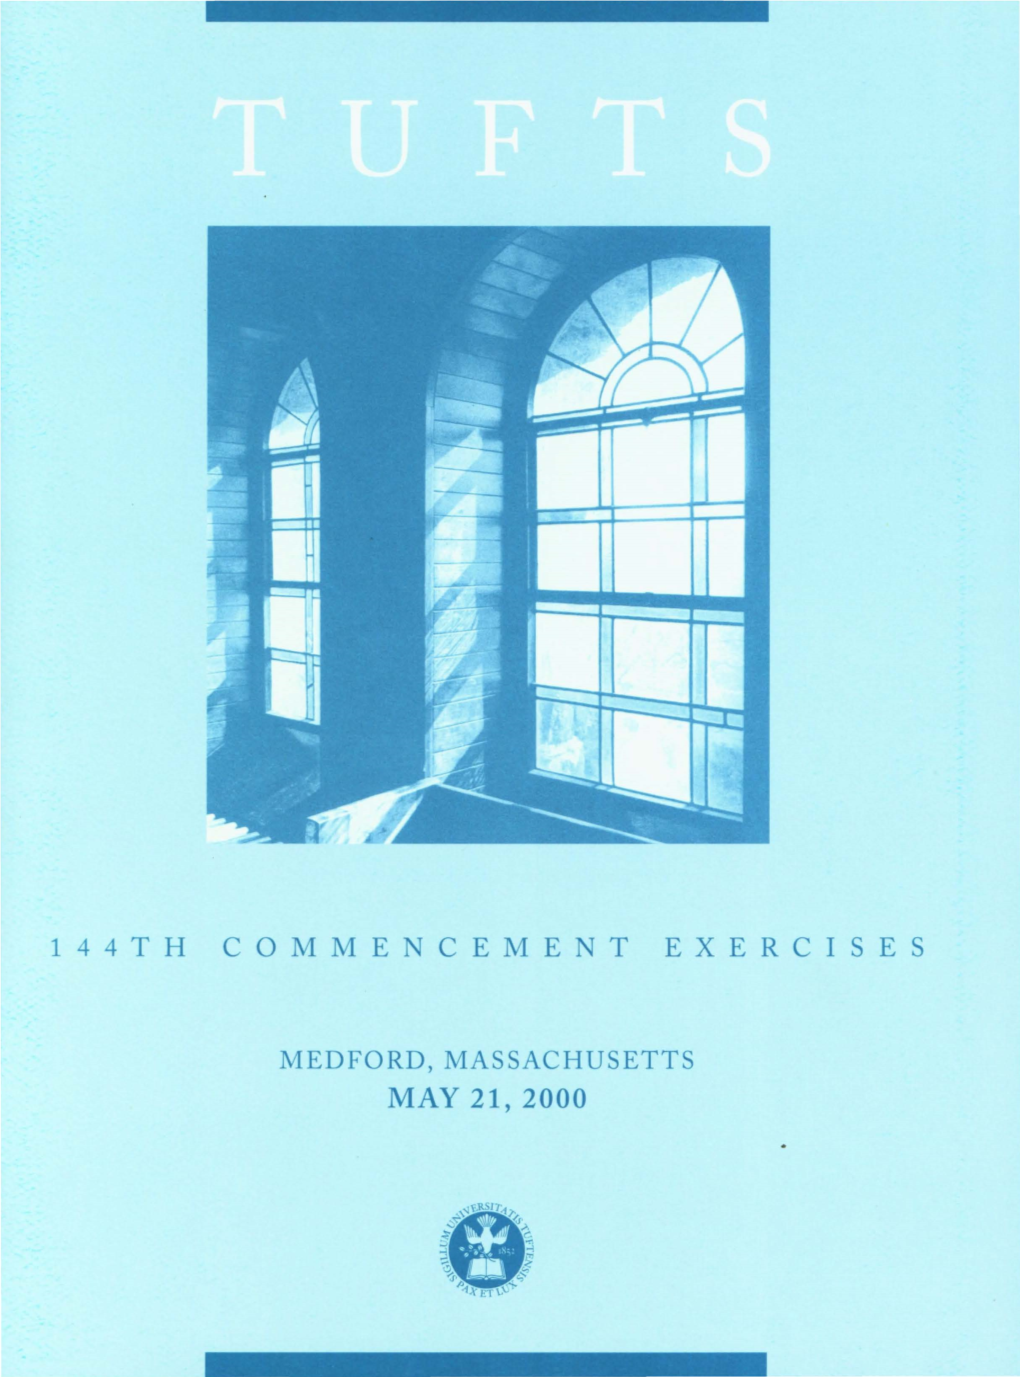 May 21, 2000 Tufts University